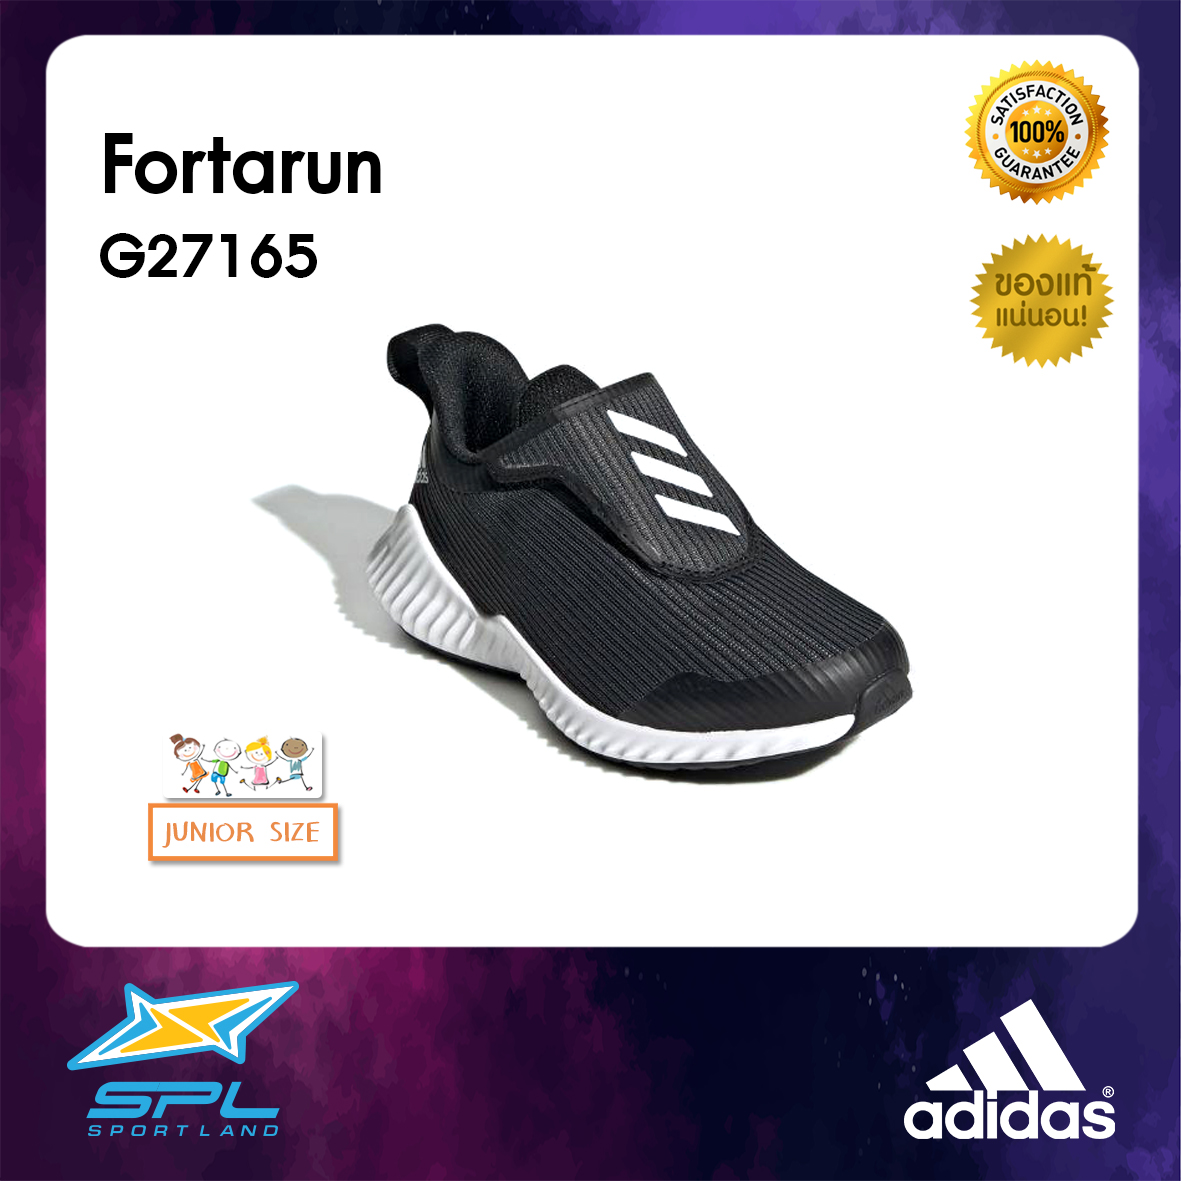 Adidas รองเท้าเทรนนิ่ง รองเท้ากีฬาเด็ก รองเท้าเด็ก ผ้าใบเด็ก อาดิดาส Training Junior Shoe FortarunAC G27165 (1600)